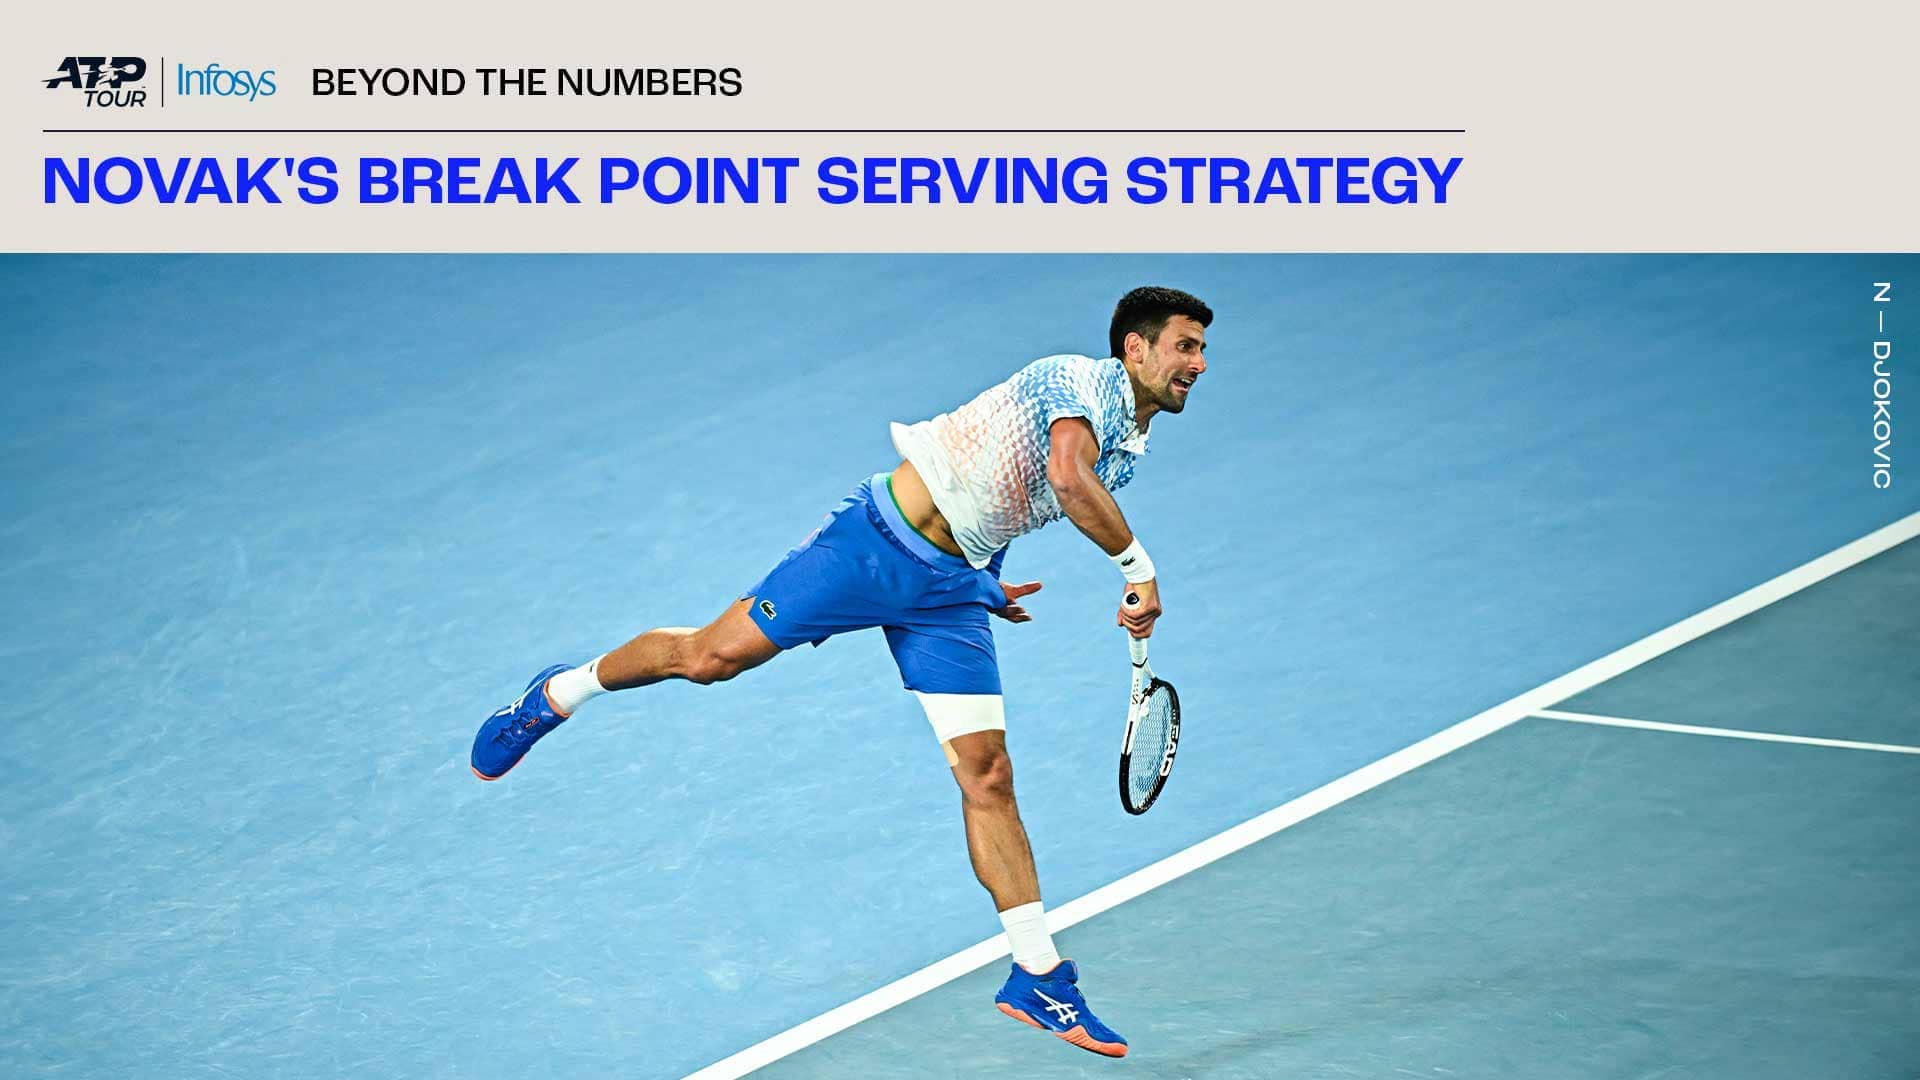 Here's Djokovic's game plan when he's down break point...